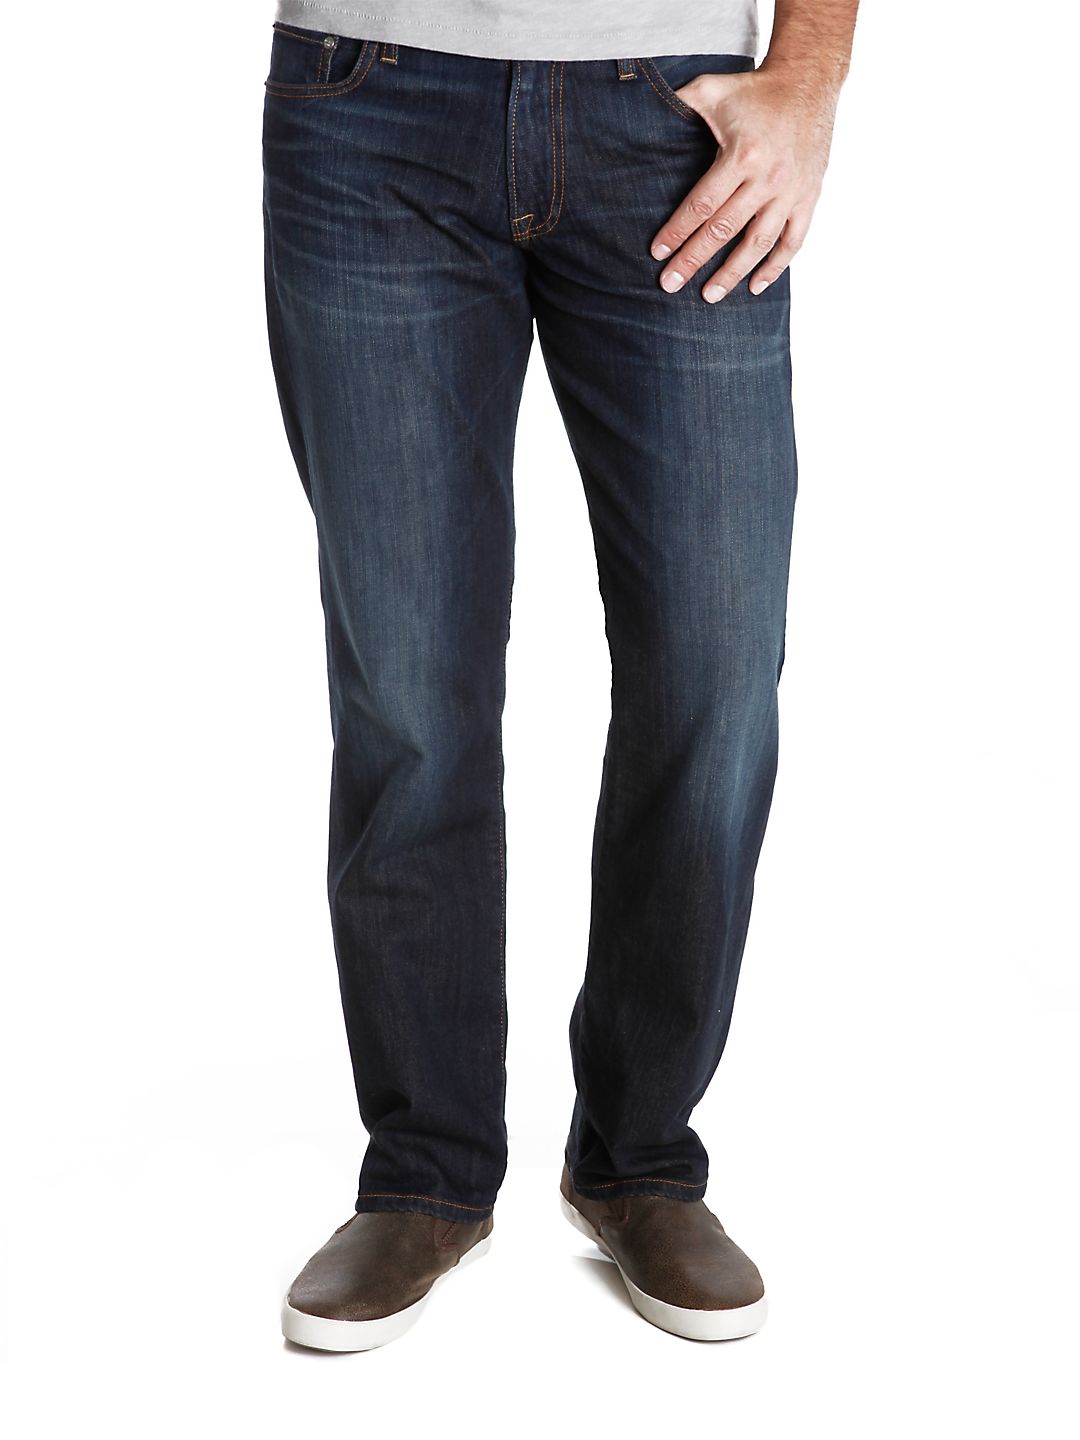 221 Original Straight Barite Wash Jeans - image 2 of 2